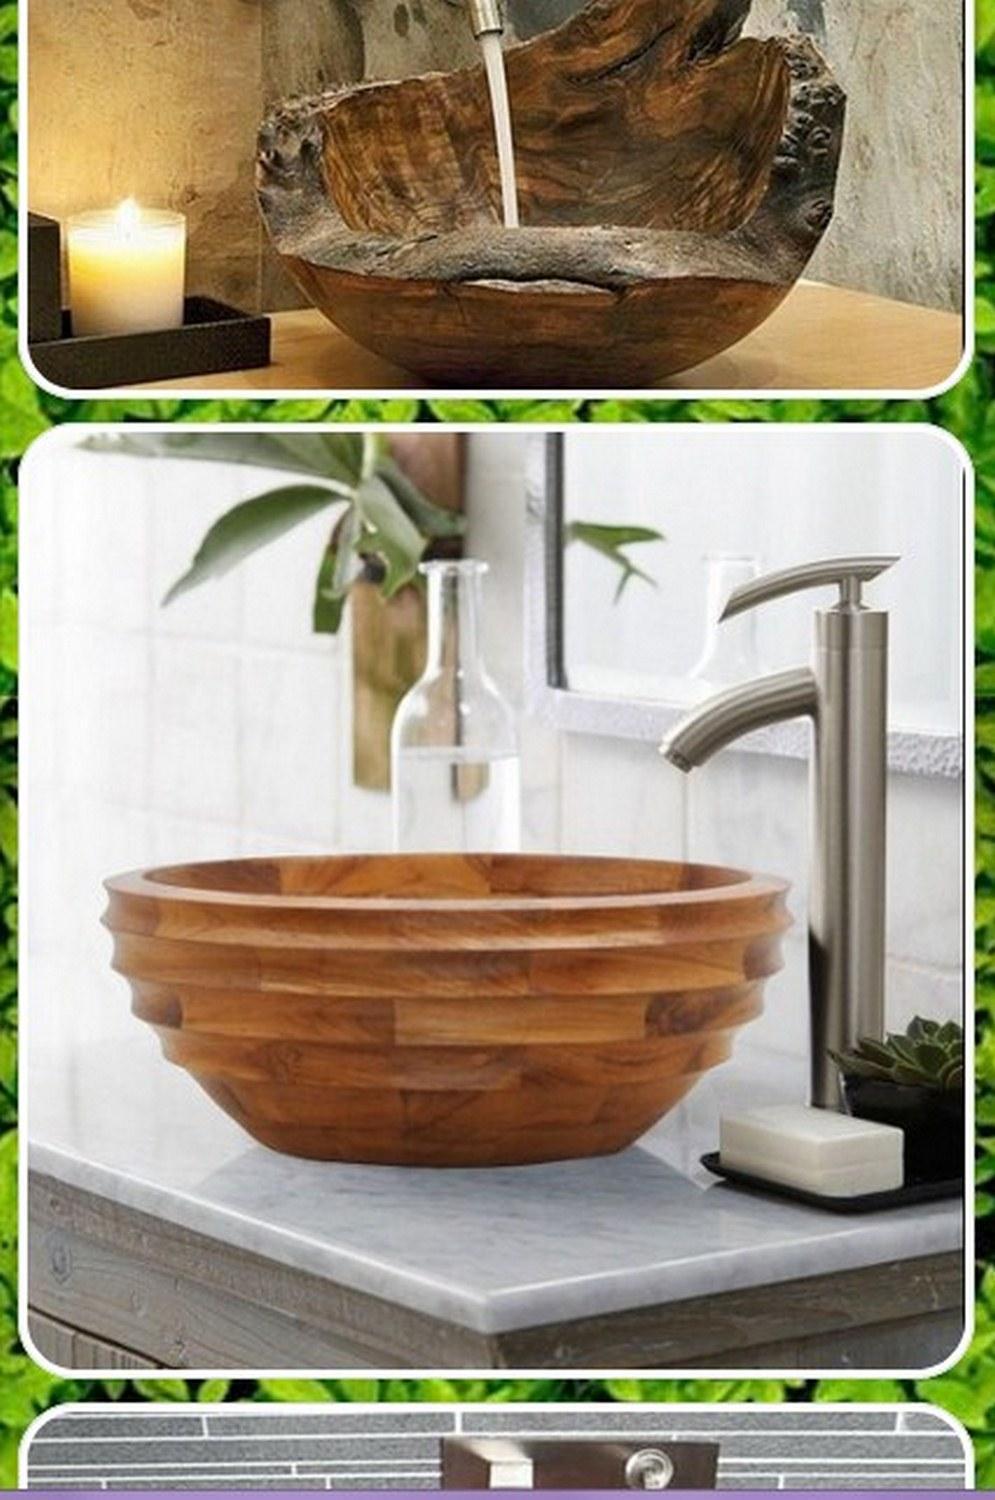 Wood Sink Design 3.0 Screenshot 19